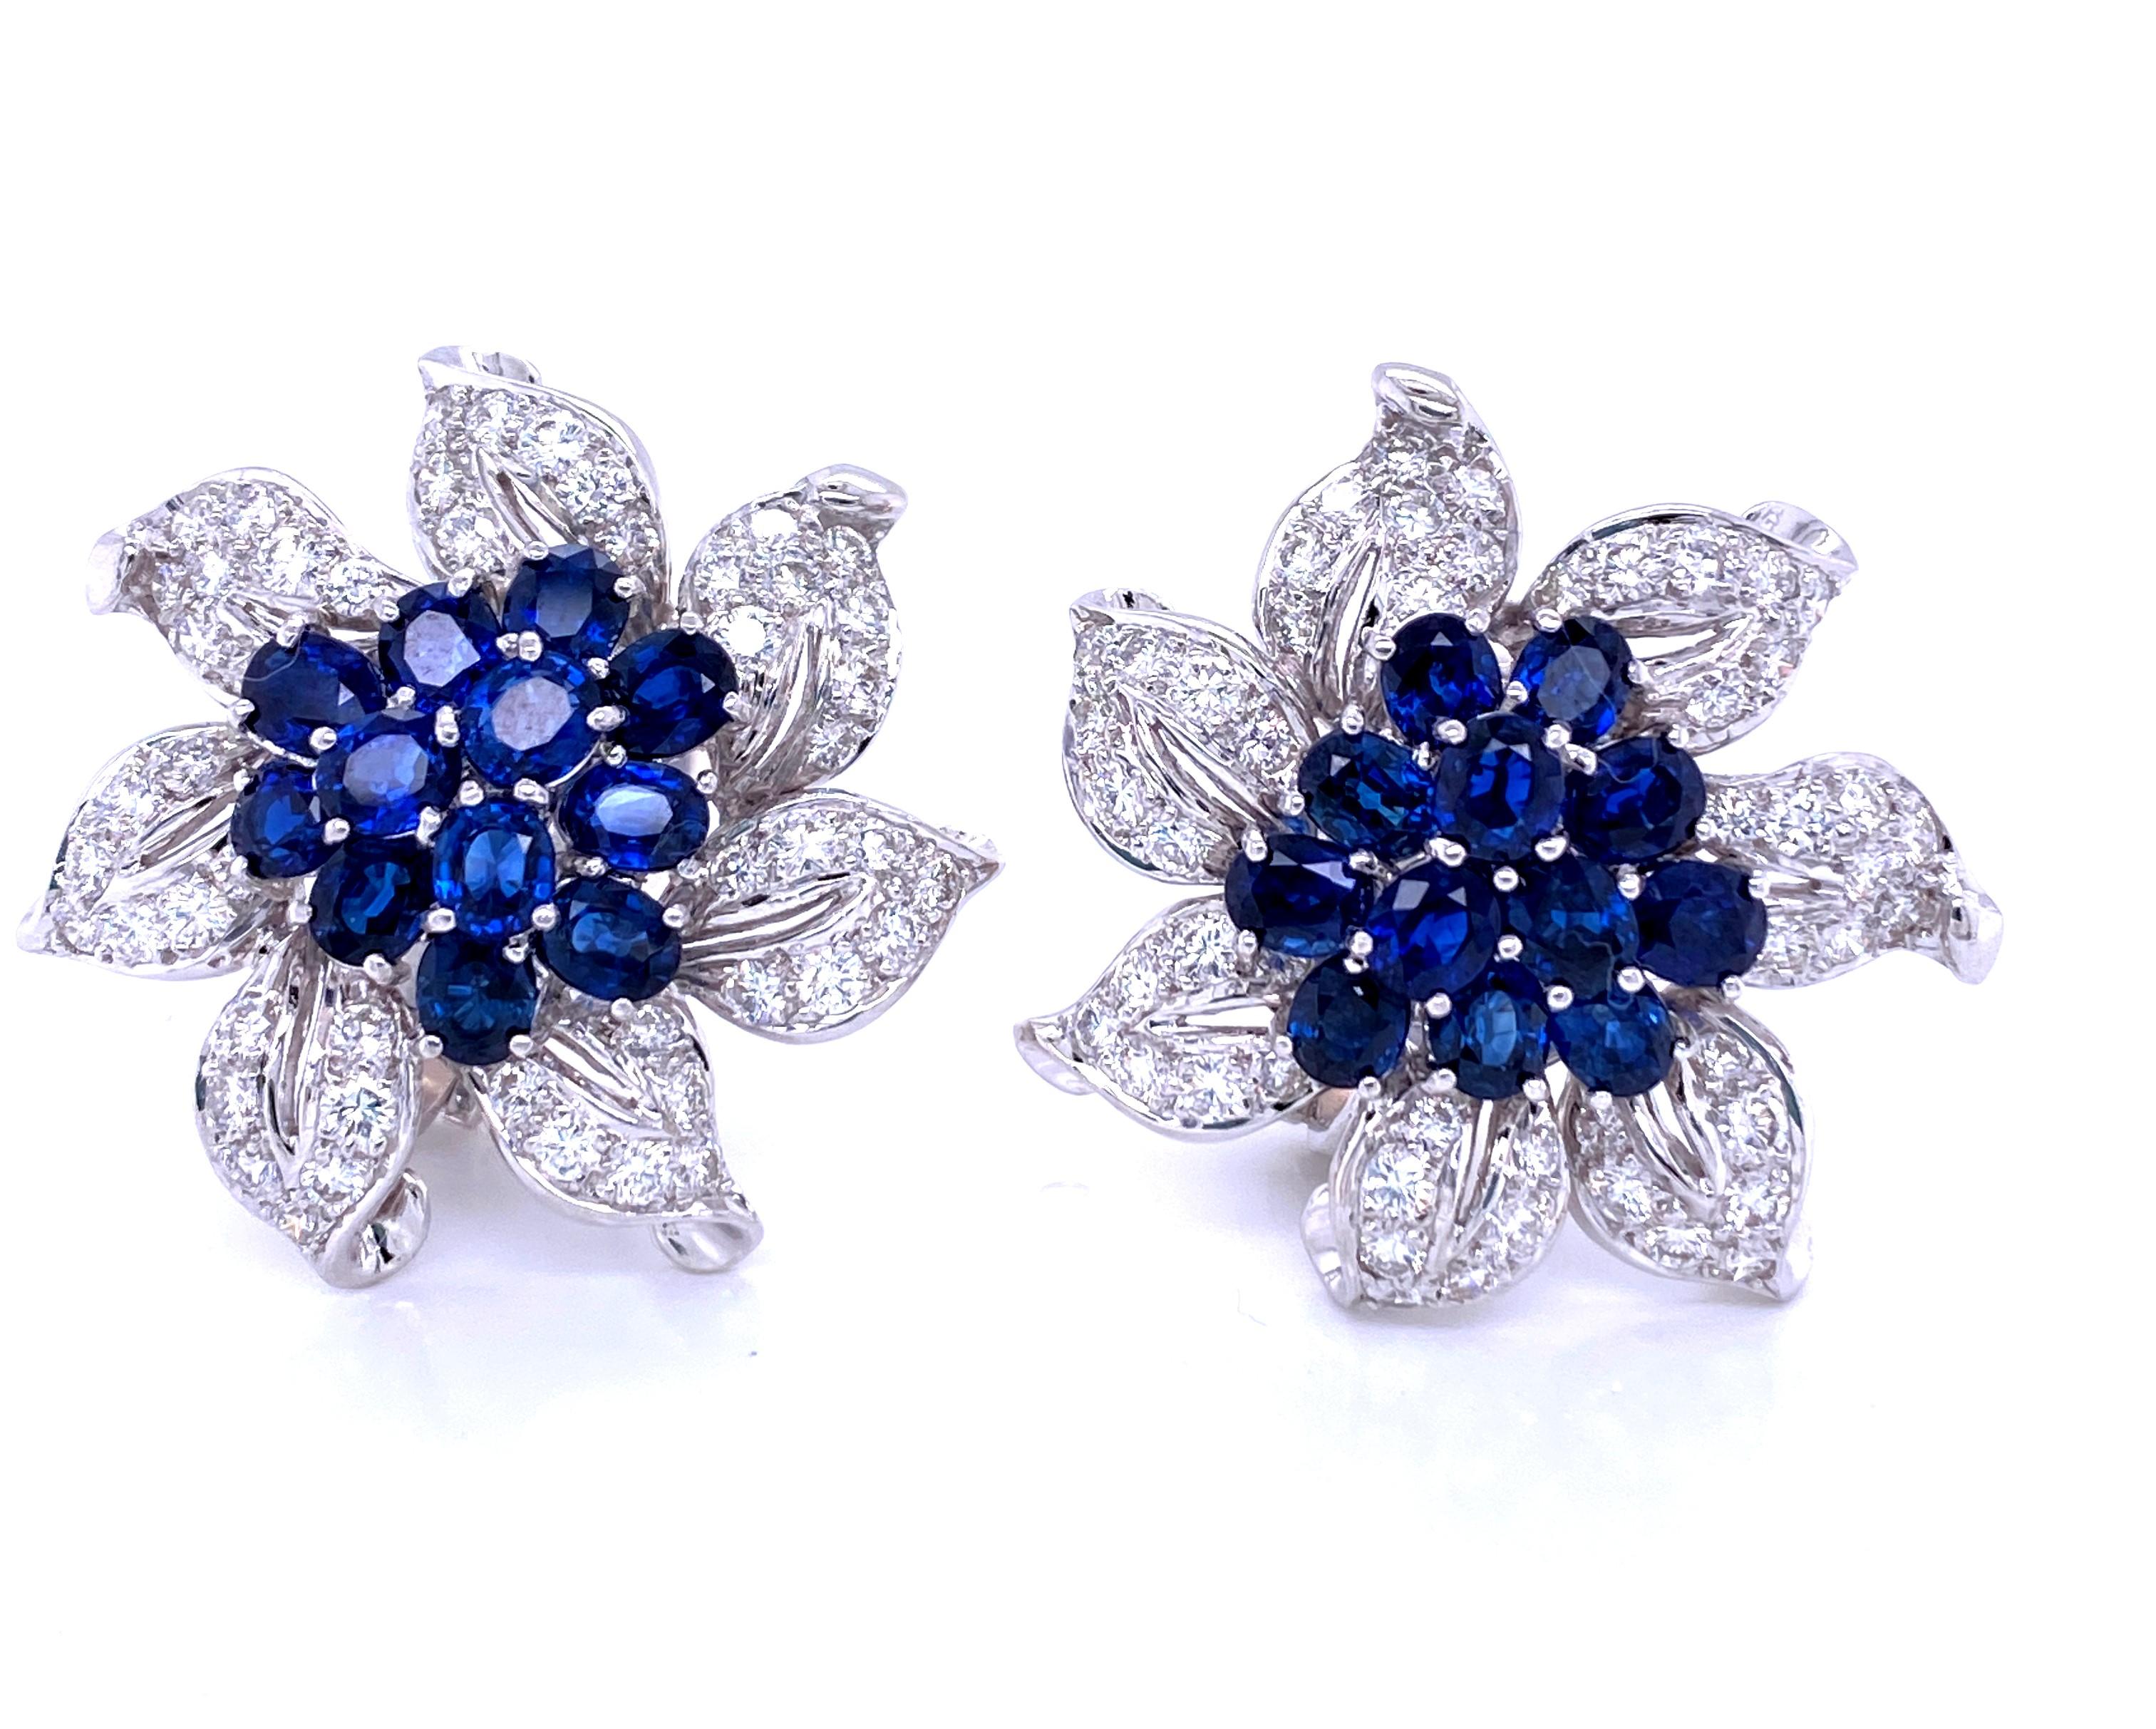 Oval Cut Diamond and Sapphire Flower Earrings